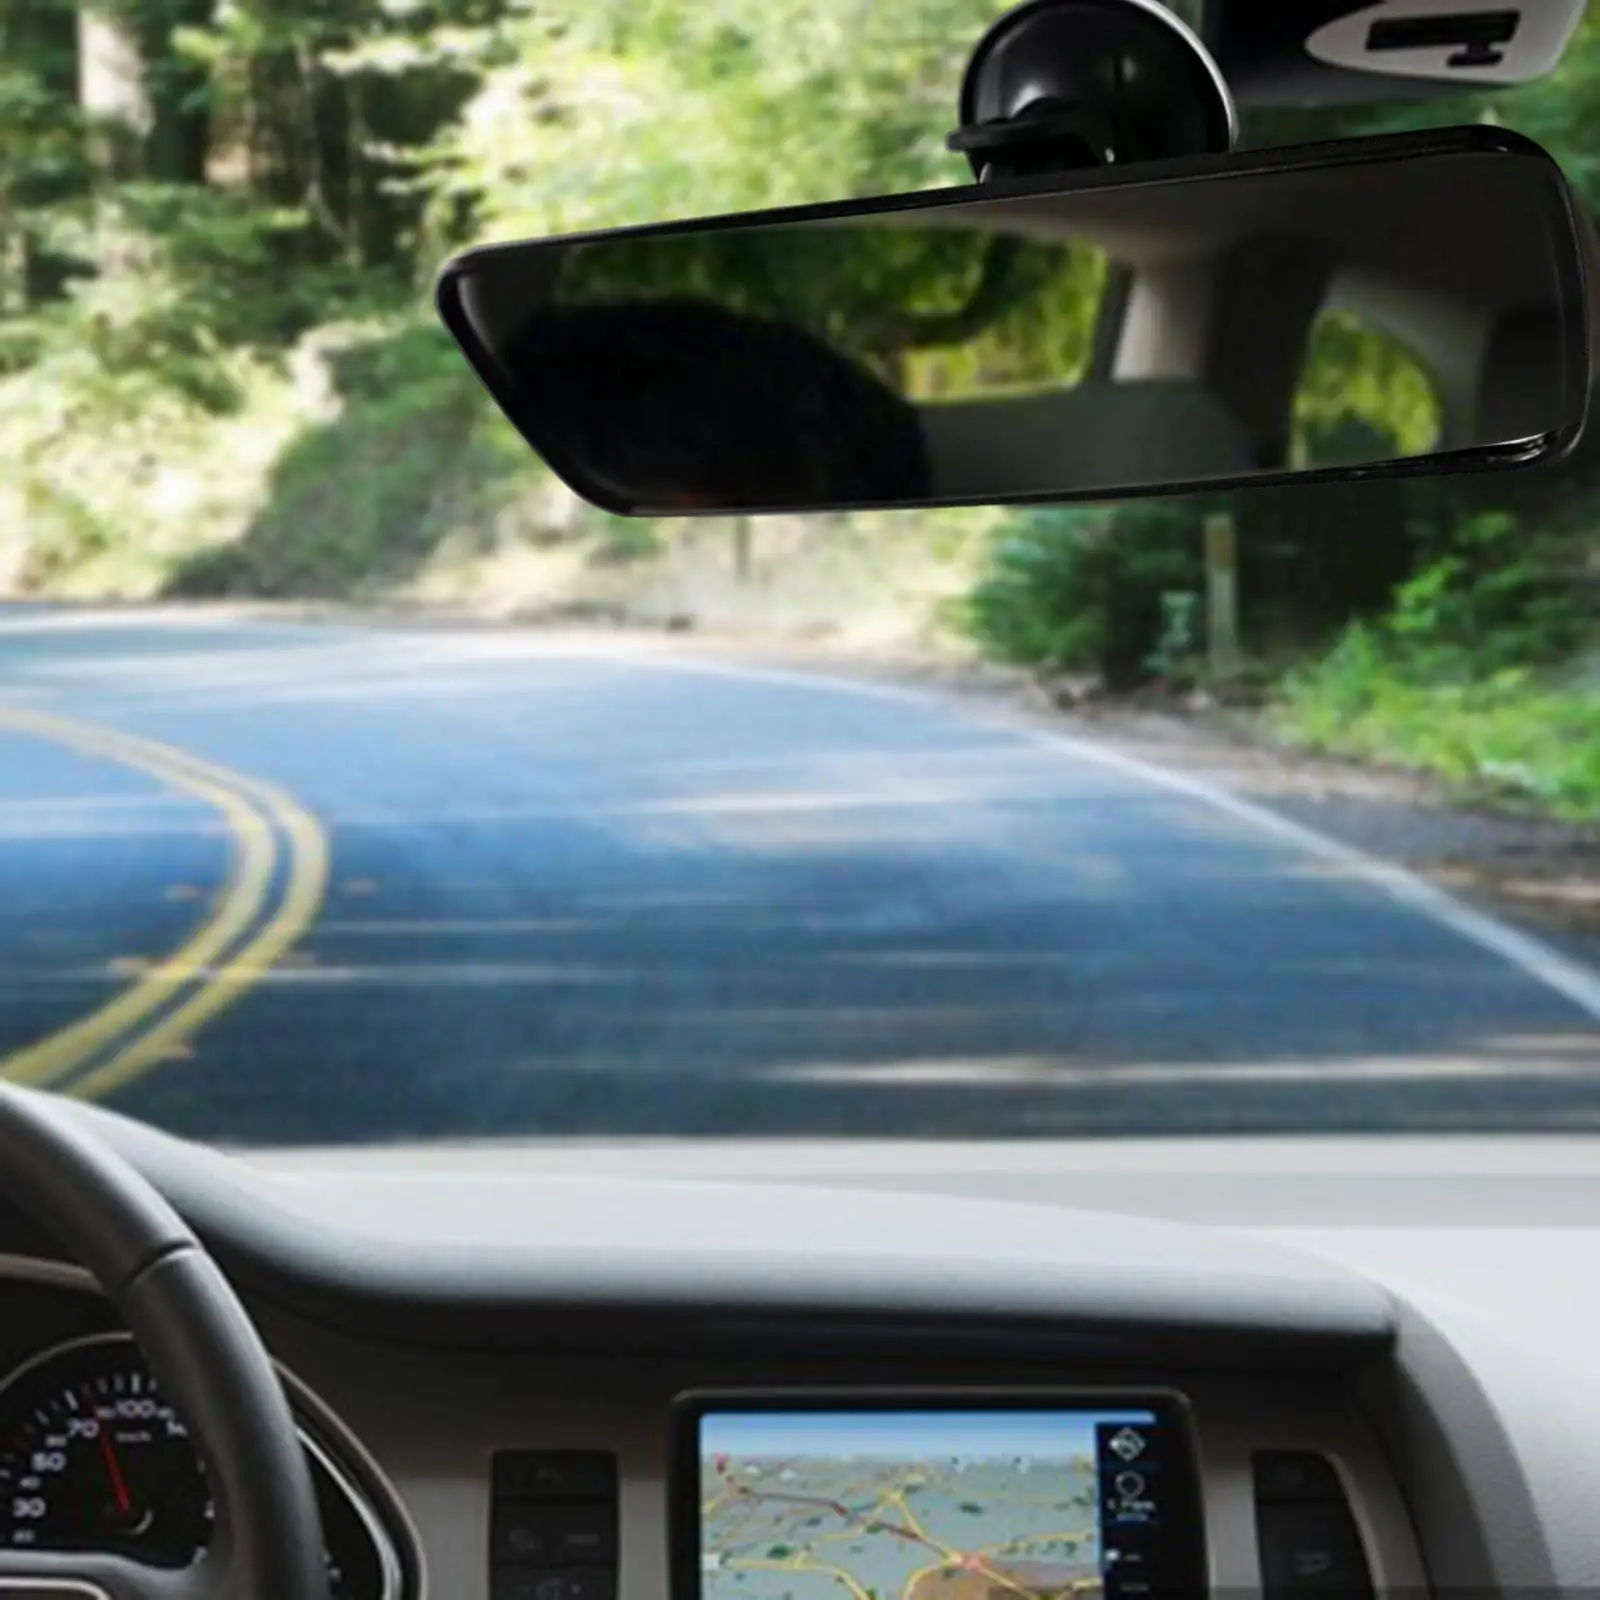 Interior Rear View Mirror Spot Mirror Driving Instructor Mirror for Automobile